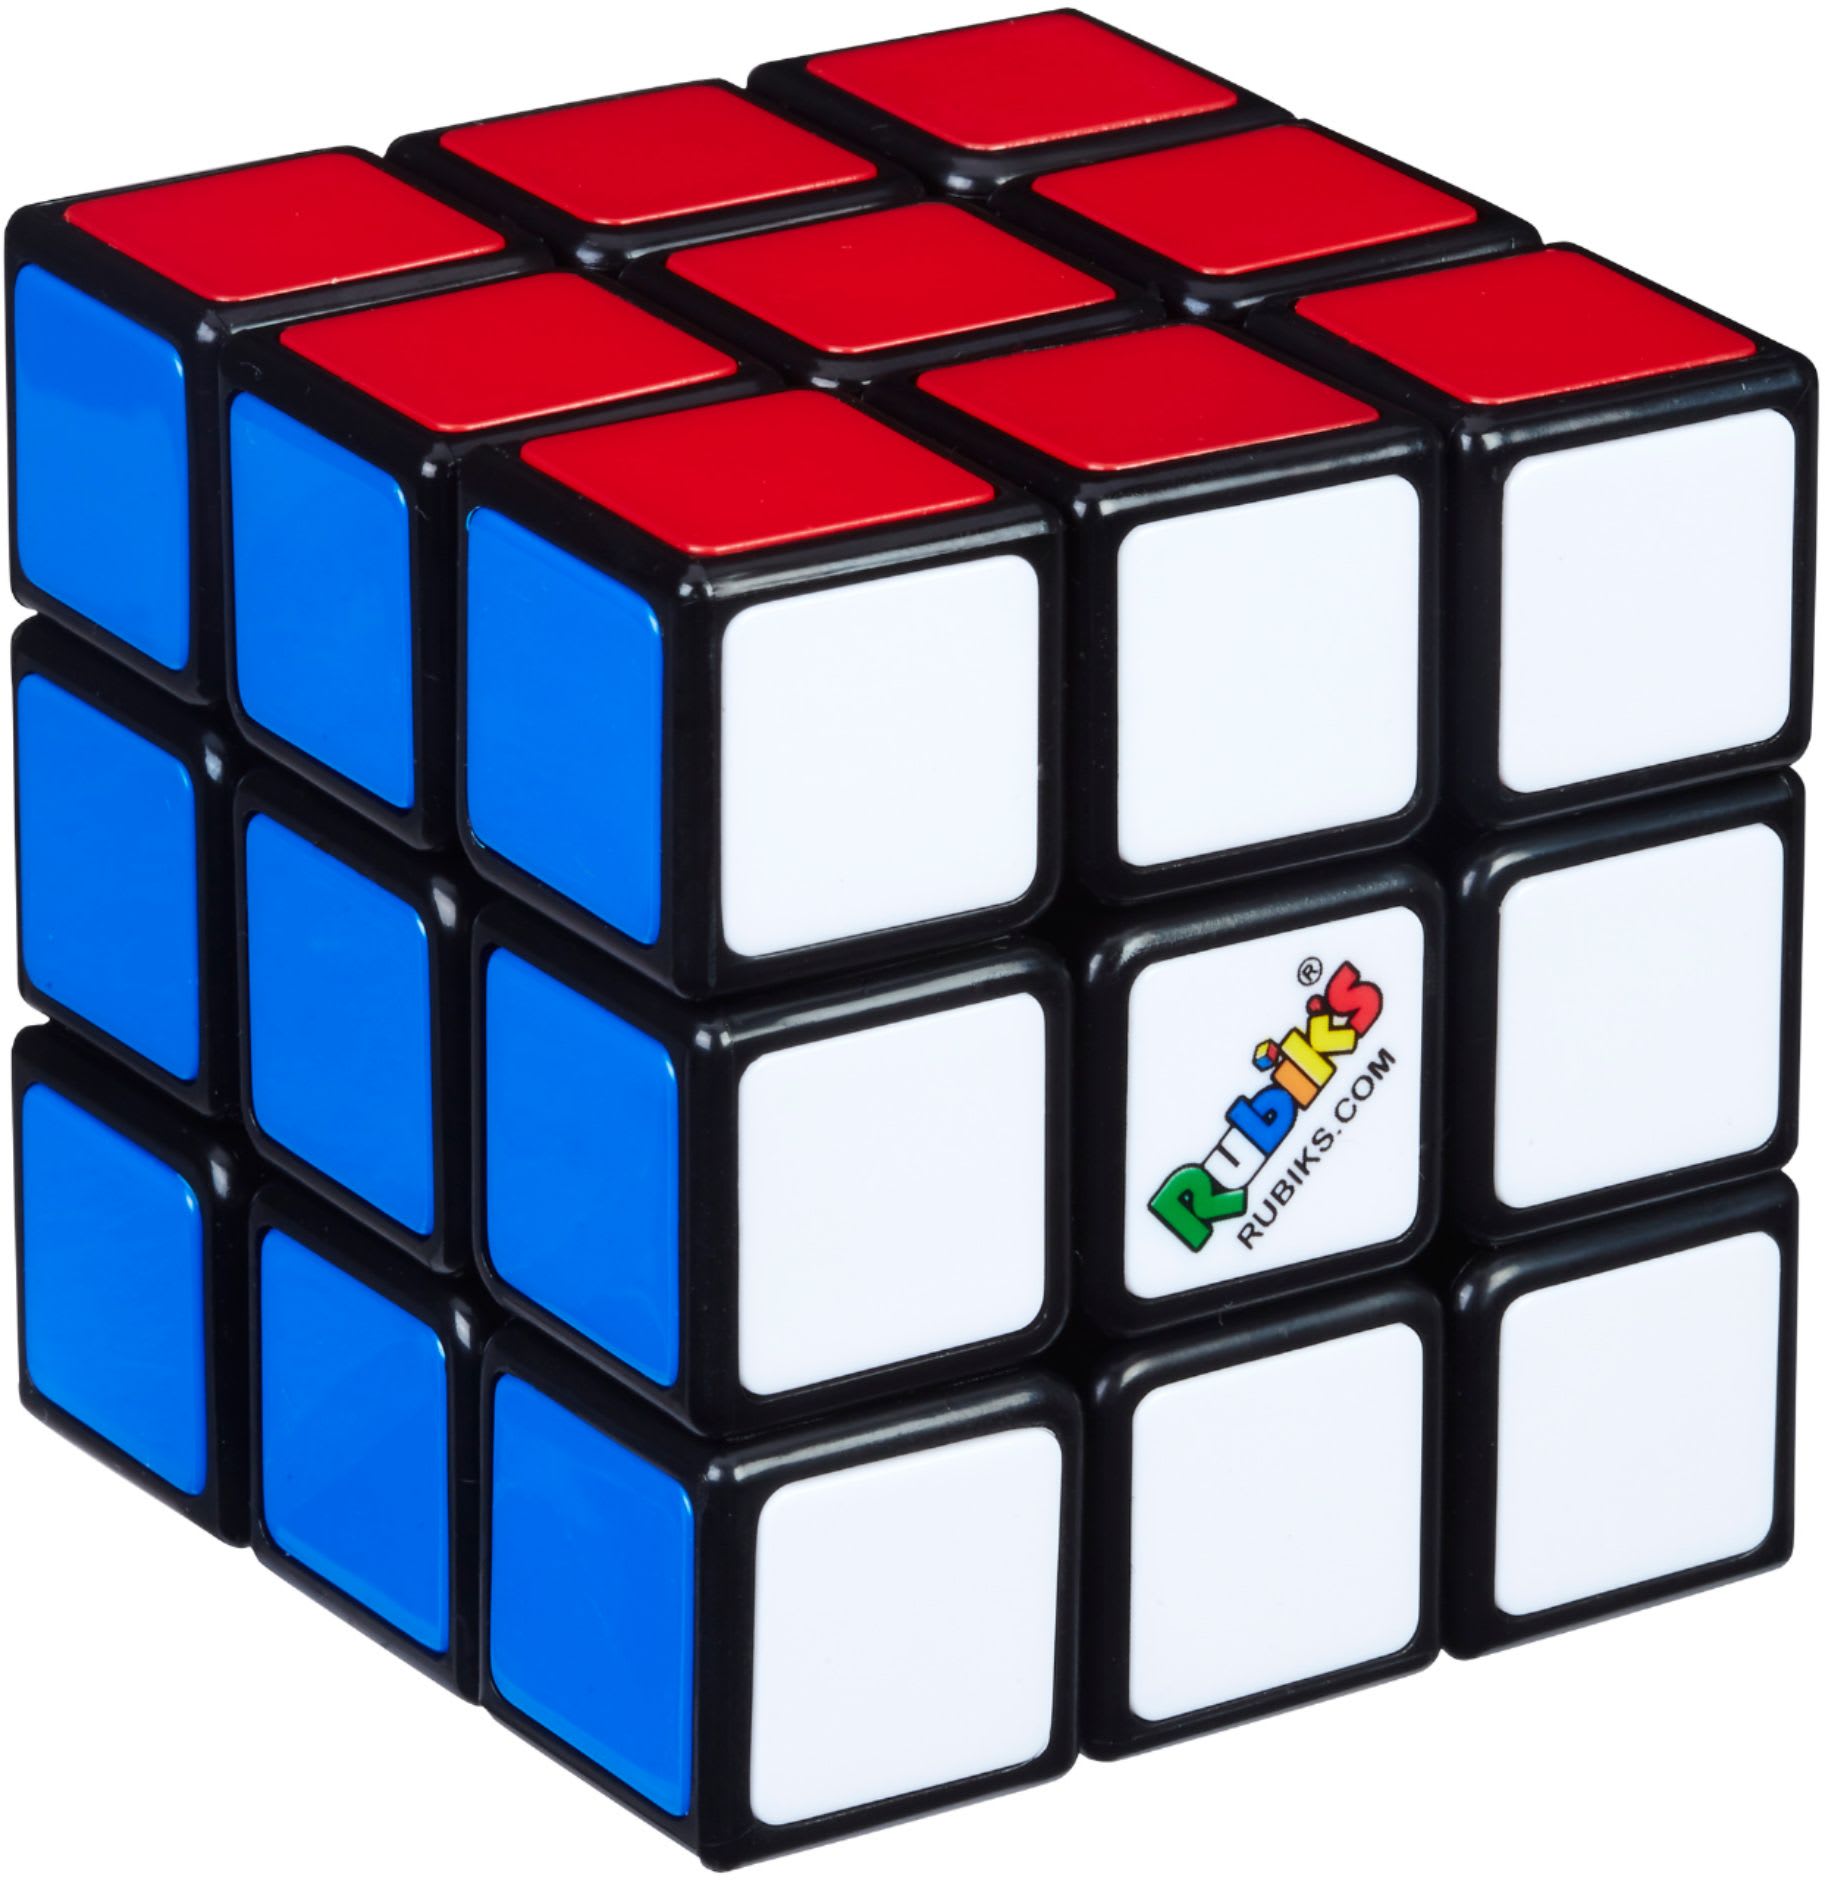 Rubik/'s Cube 3x3